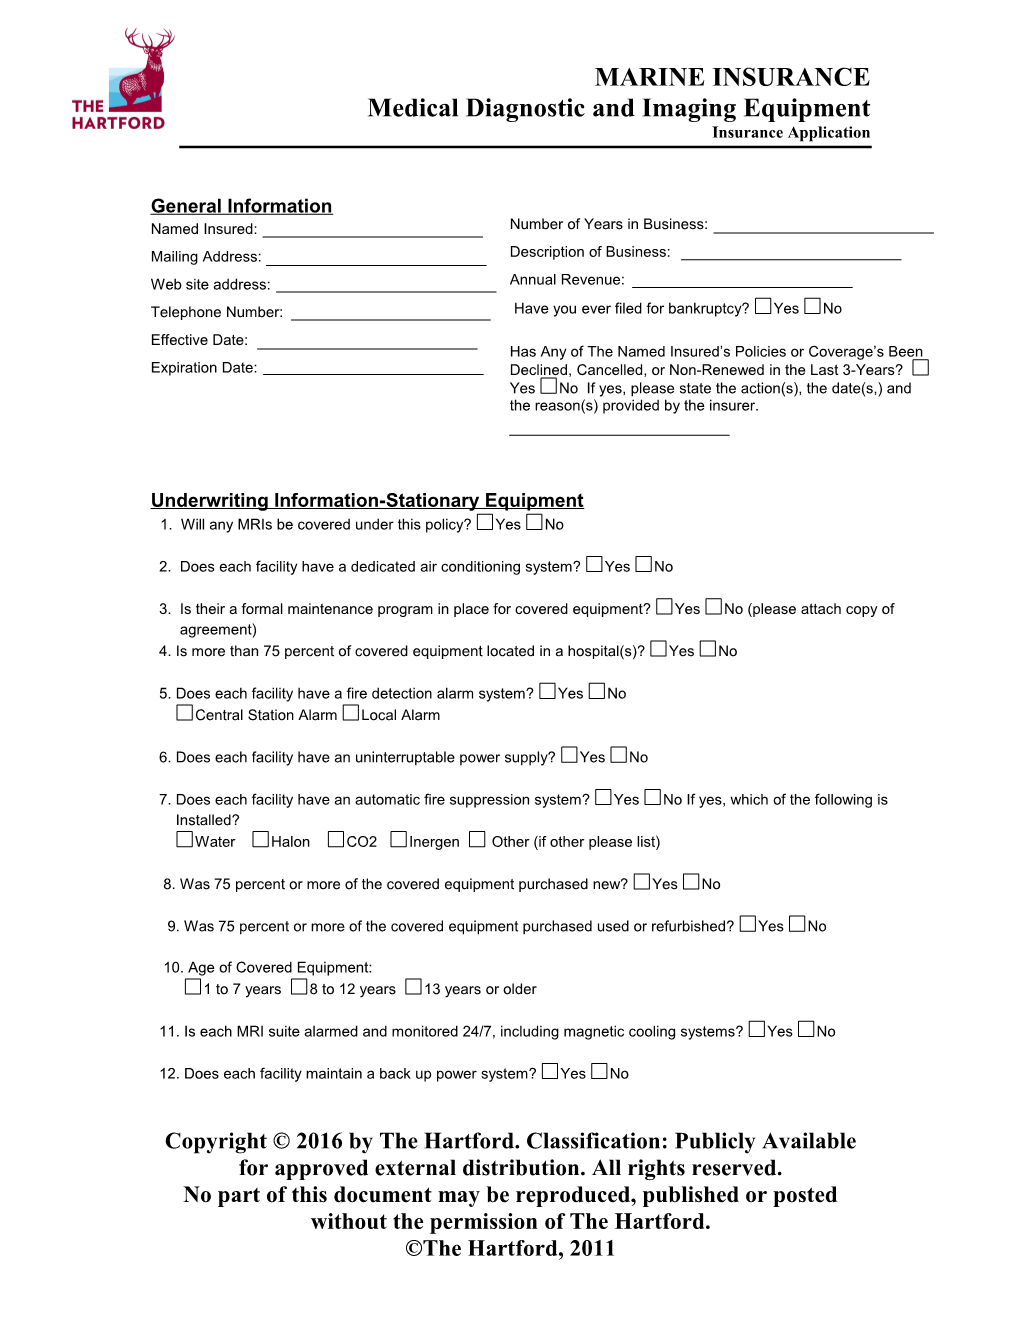 Marine Medical Diagnostic & Imaging Equipment Insurance Application